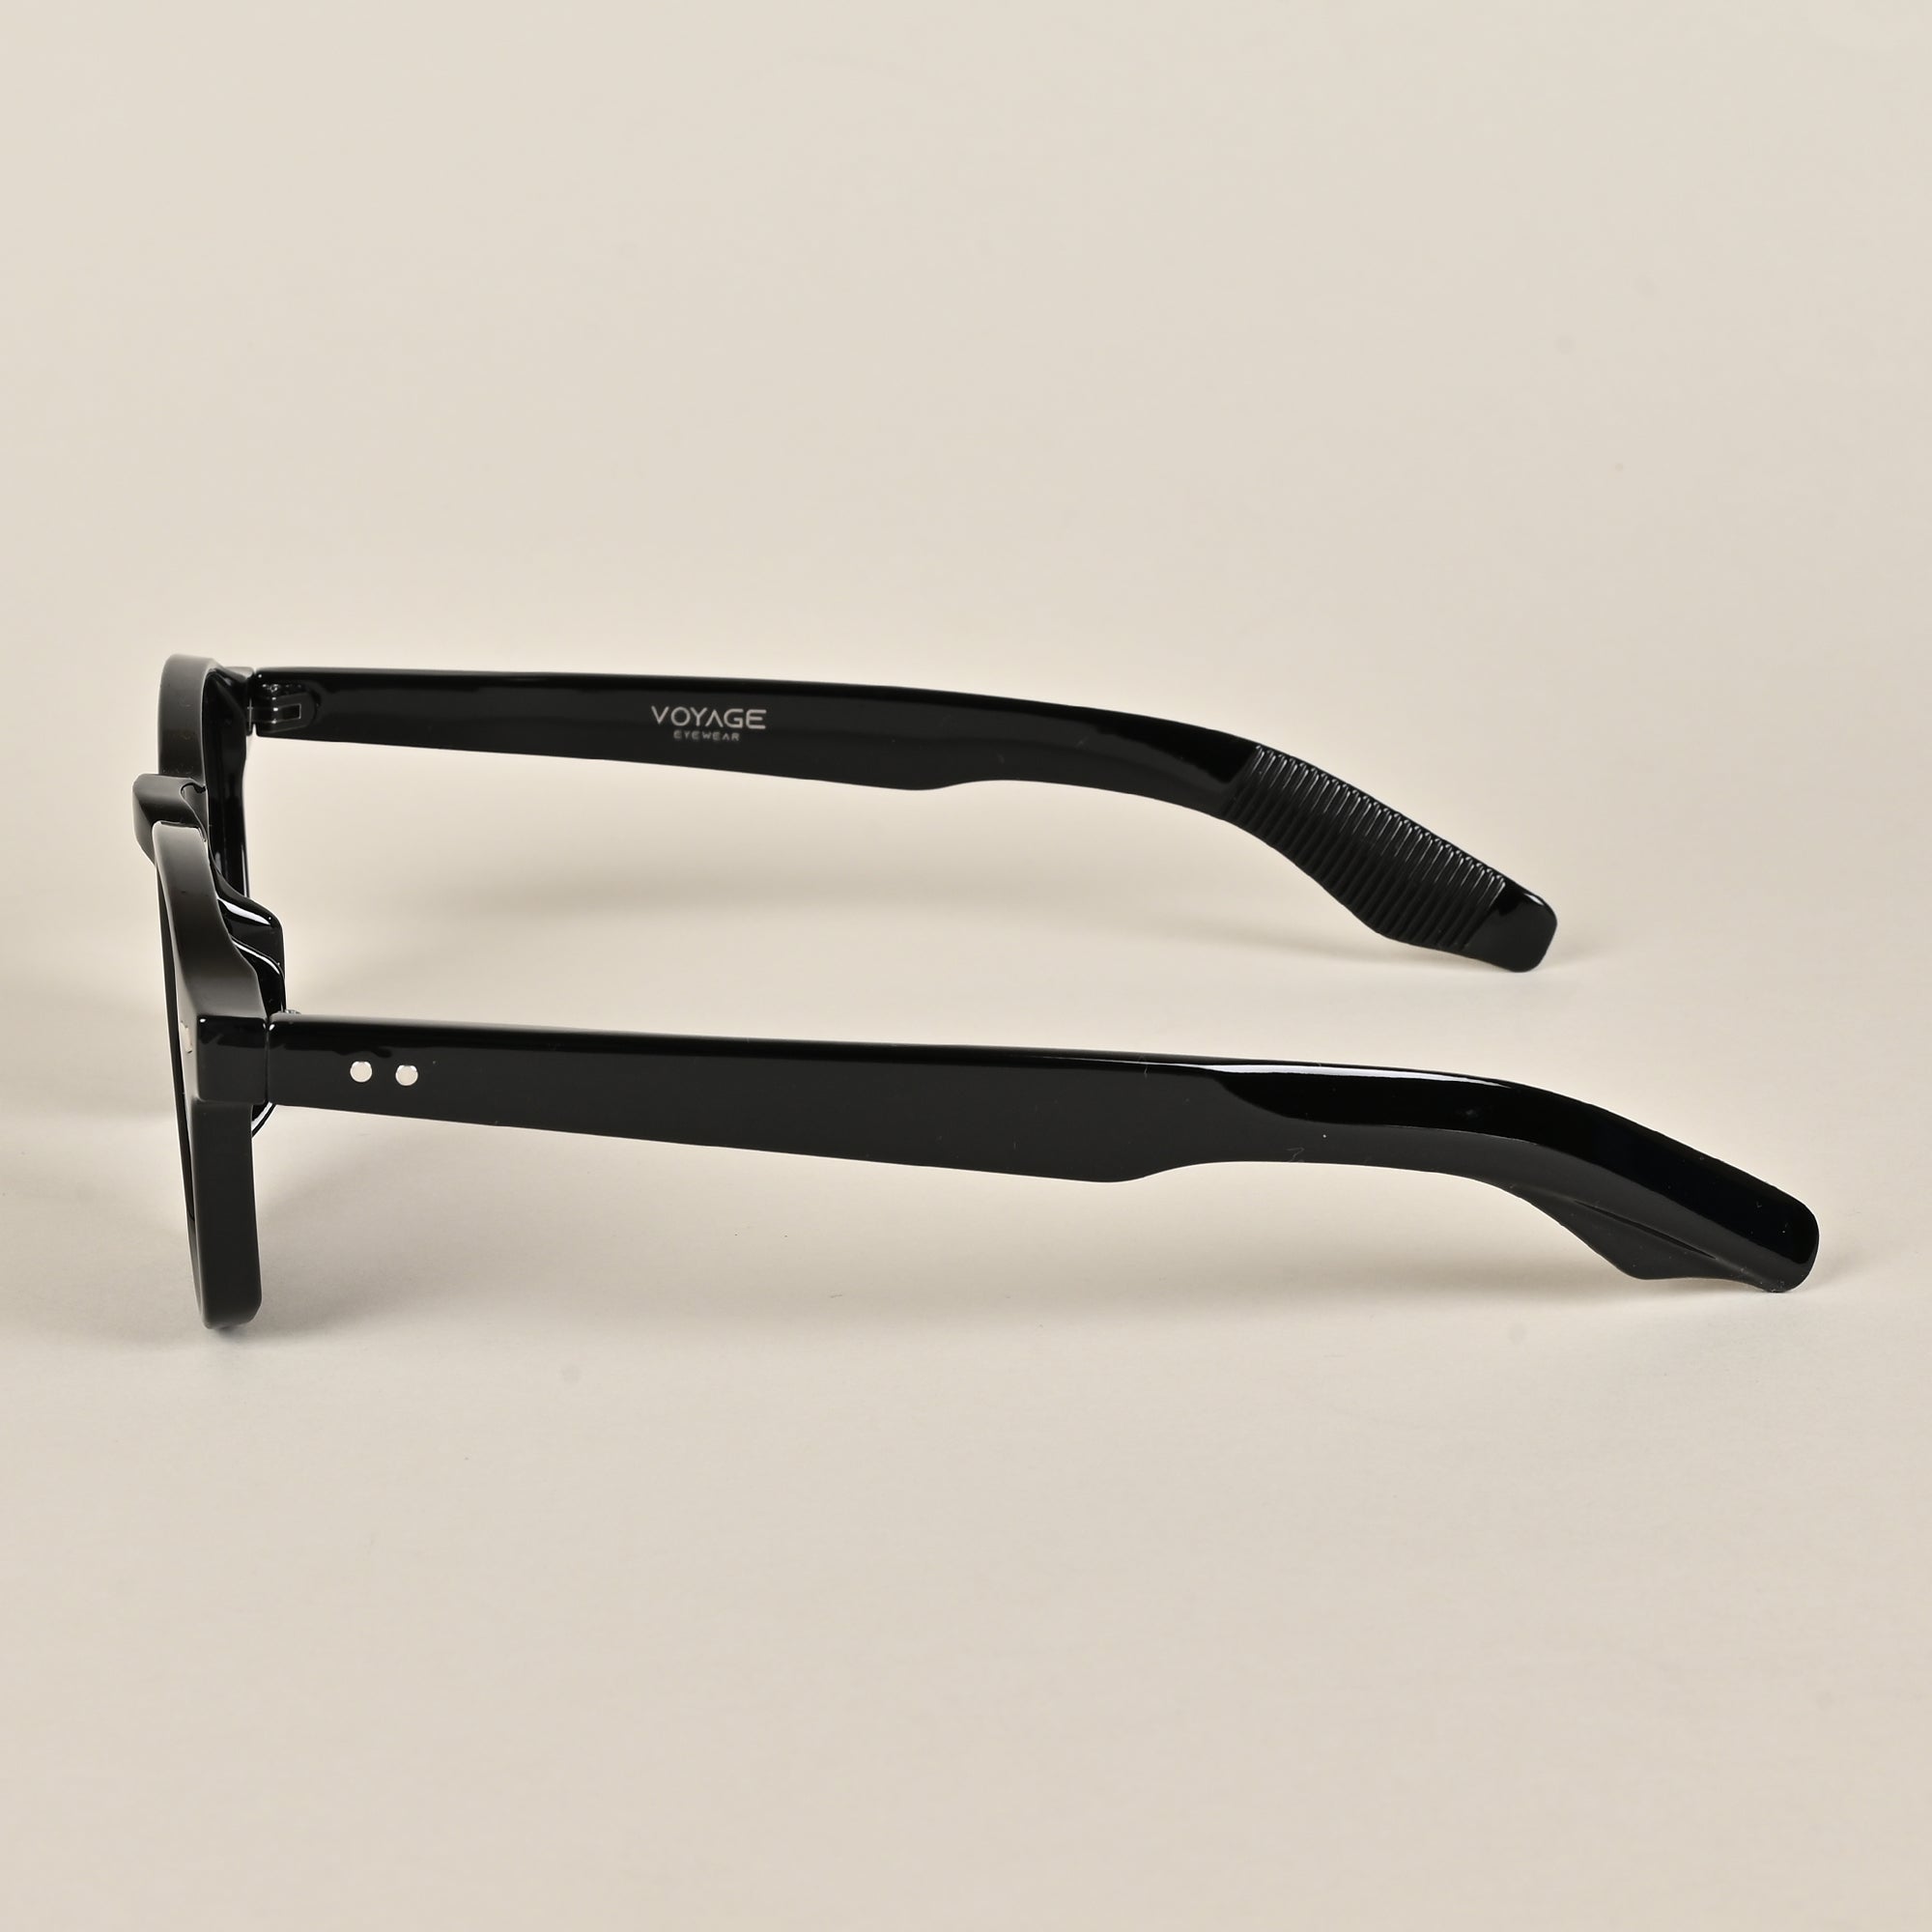 Voyage Black Round Sunglasses for Men & Women - MG3960